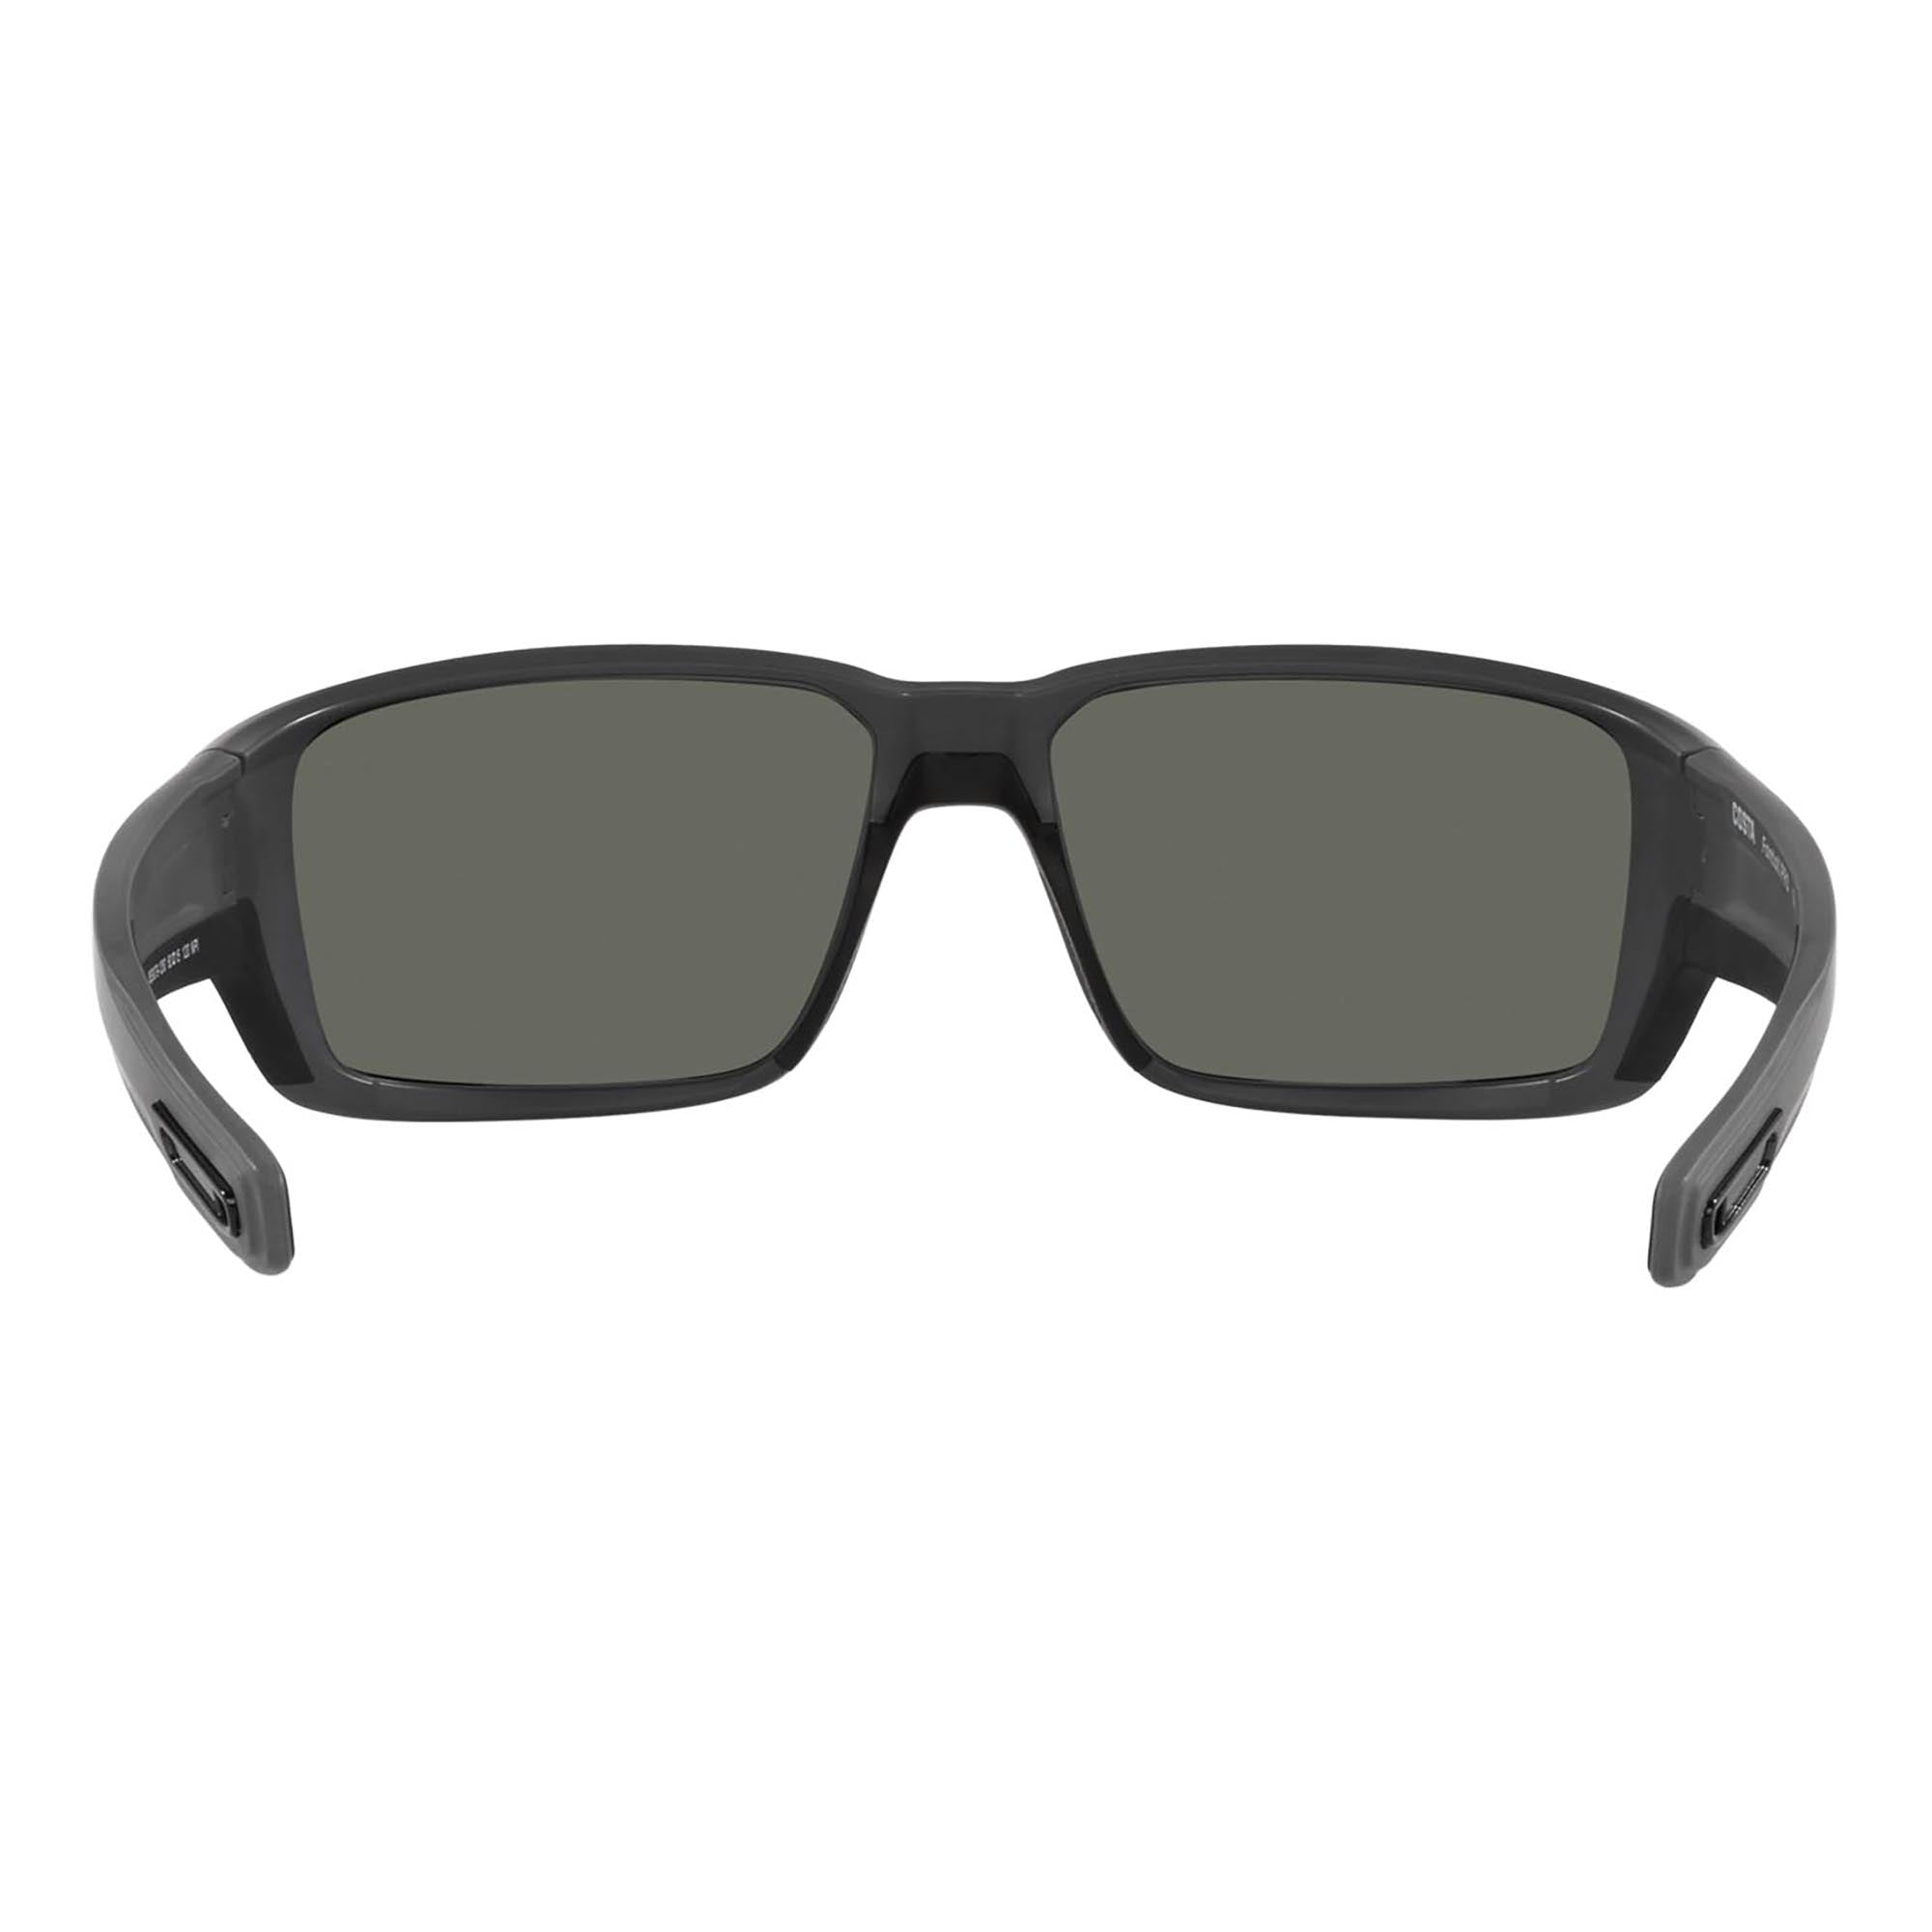 Fantail Polarized Sunglasses in Gray